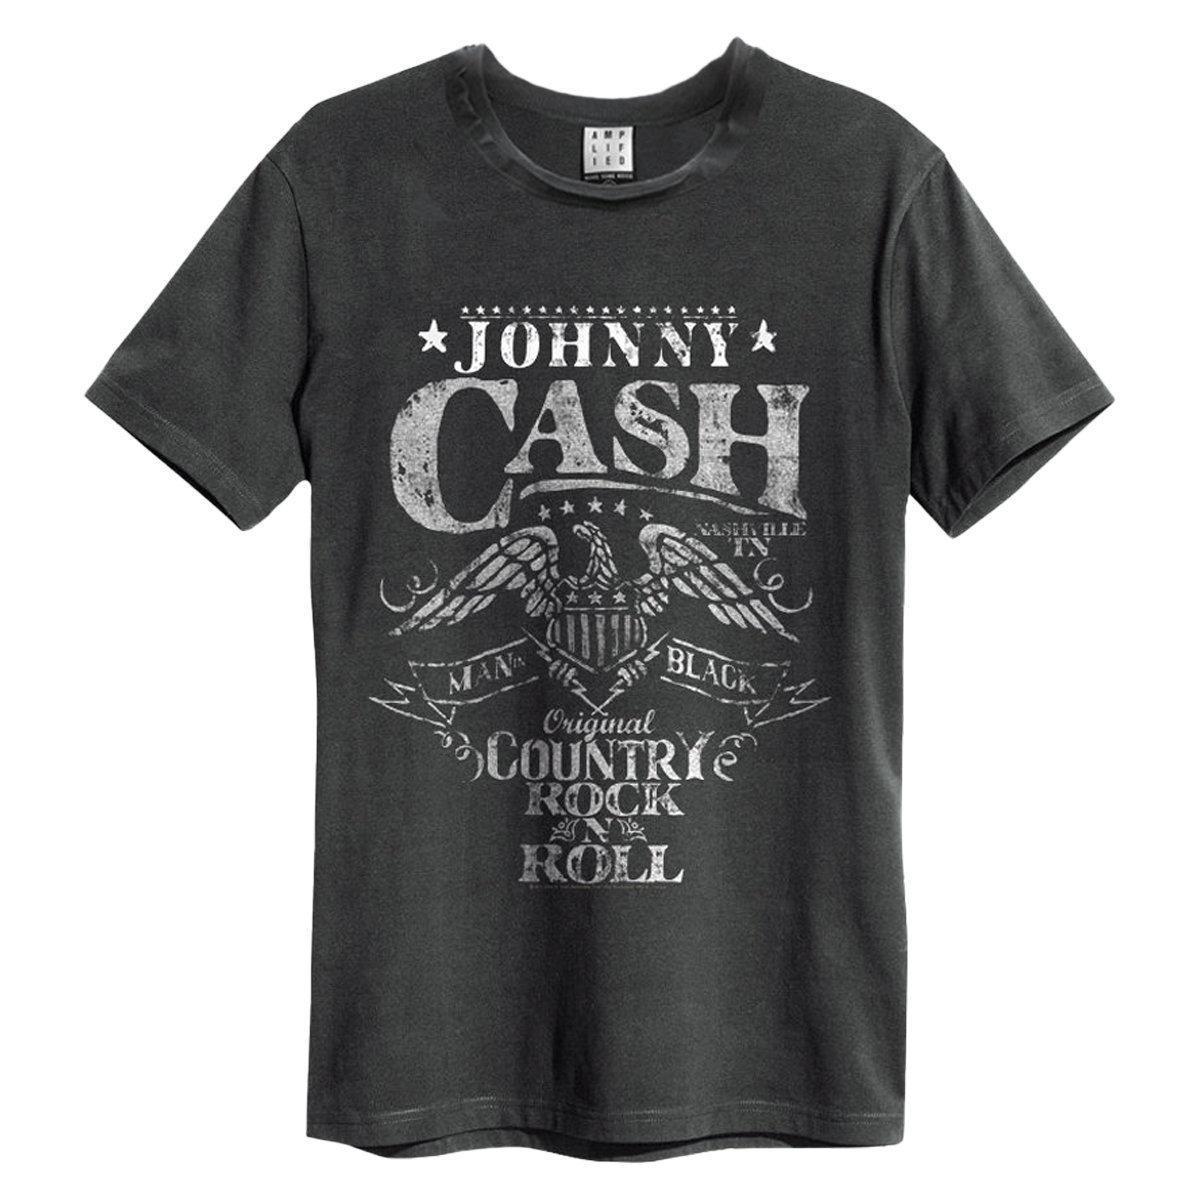 Amplified Unisex Adult Eagle Johnny Cash T-Shirt (Charcoal) (M)